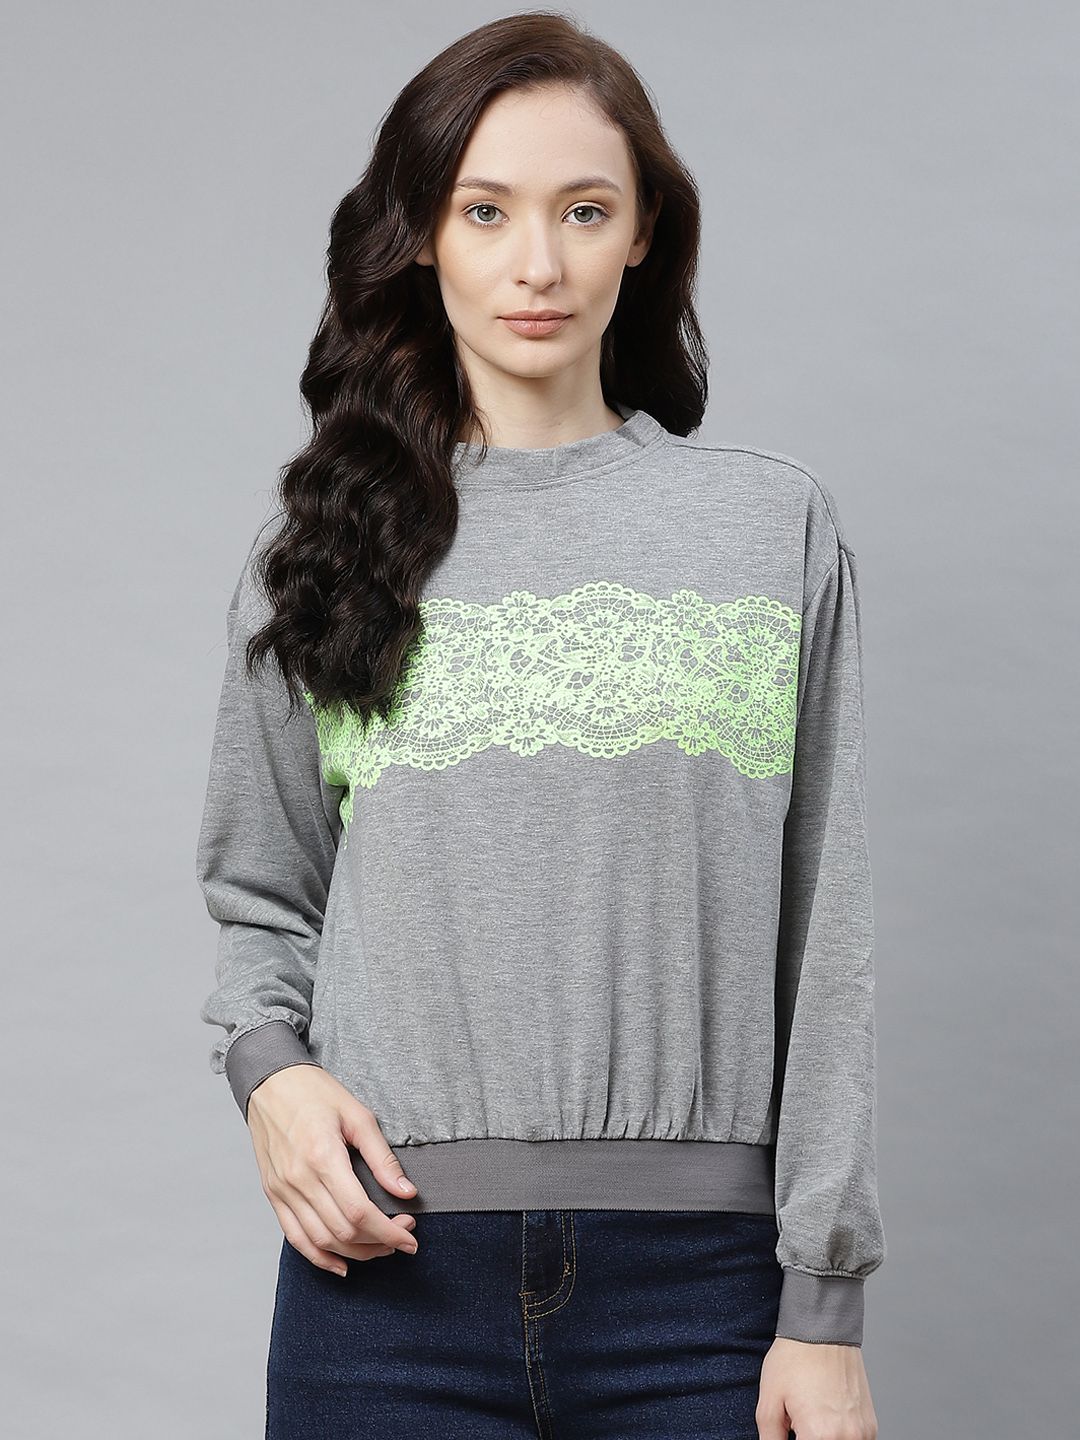 Hubberholme Women Grey Printed Sweatshirt Price in India